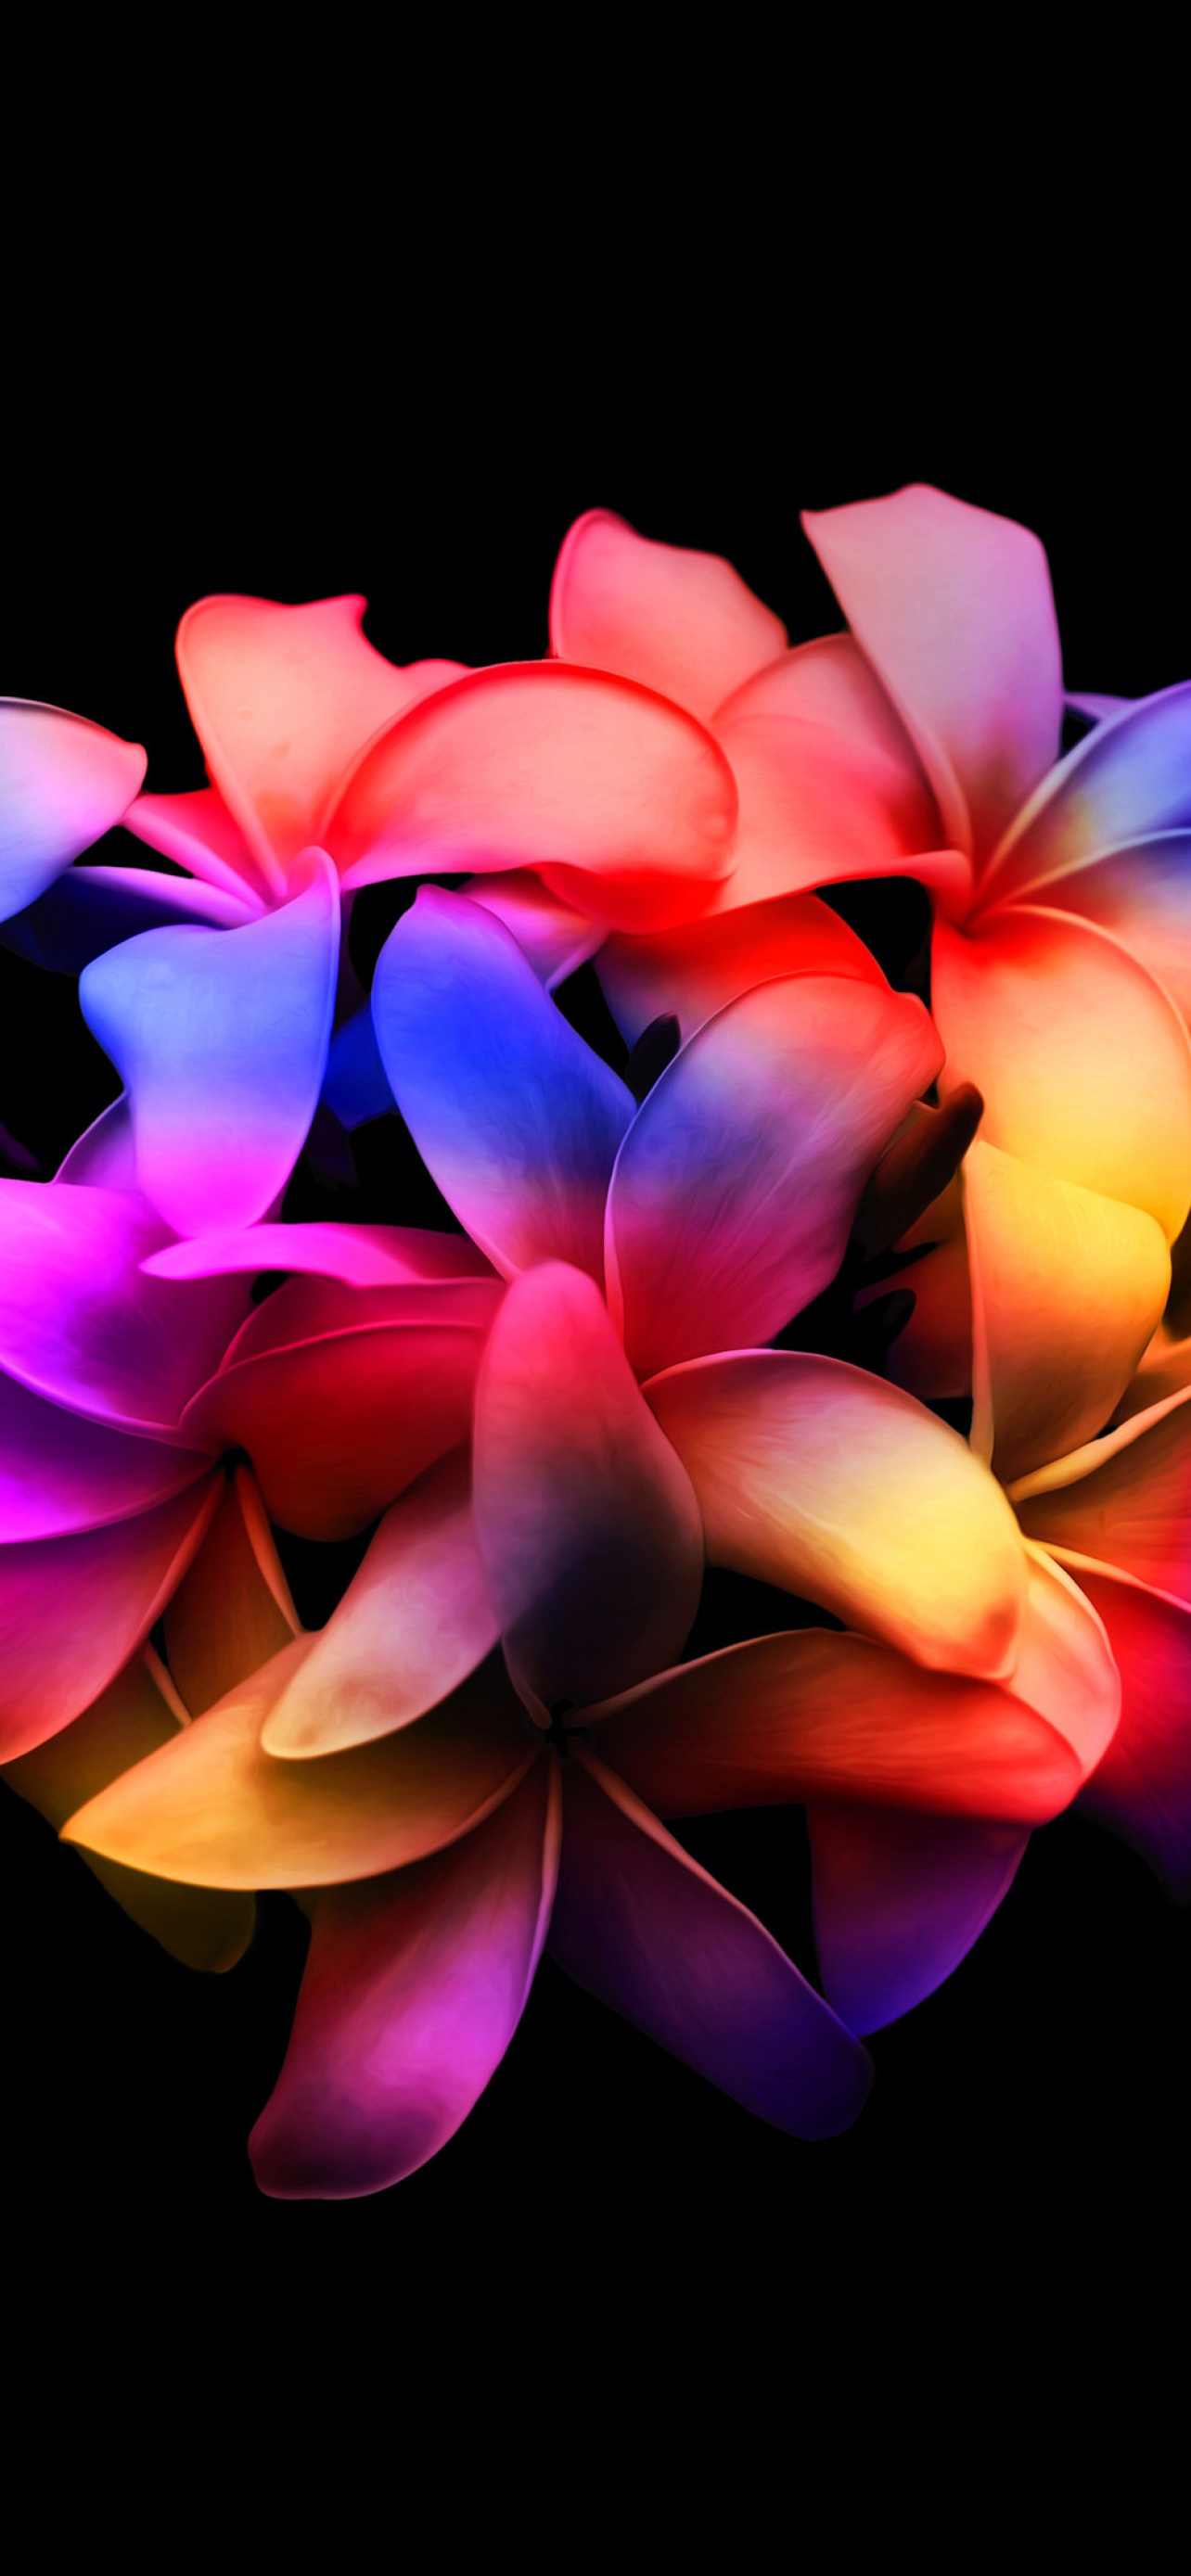 Digital Art Floral Wallpapers For Computer Desktop Background, Best  Pictures For Wallpaper Background Image And Wallpaper for Free Download